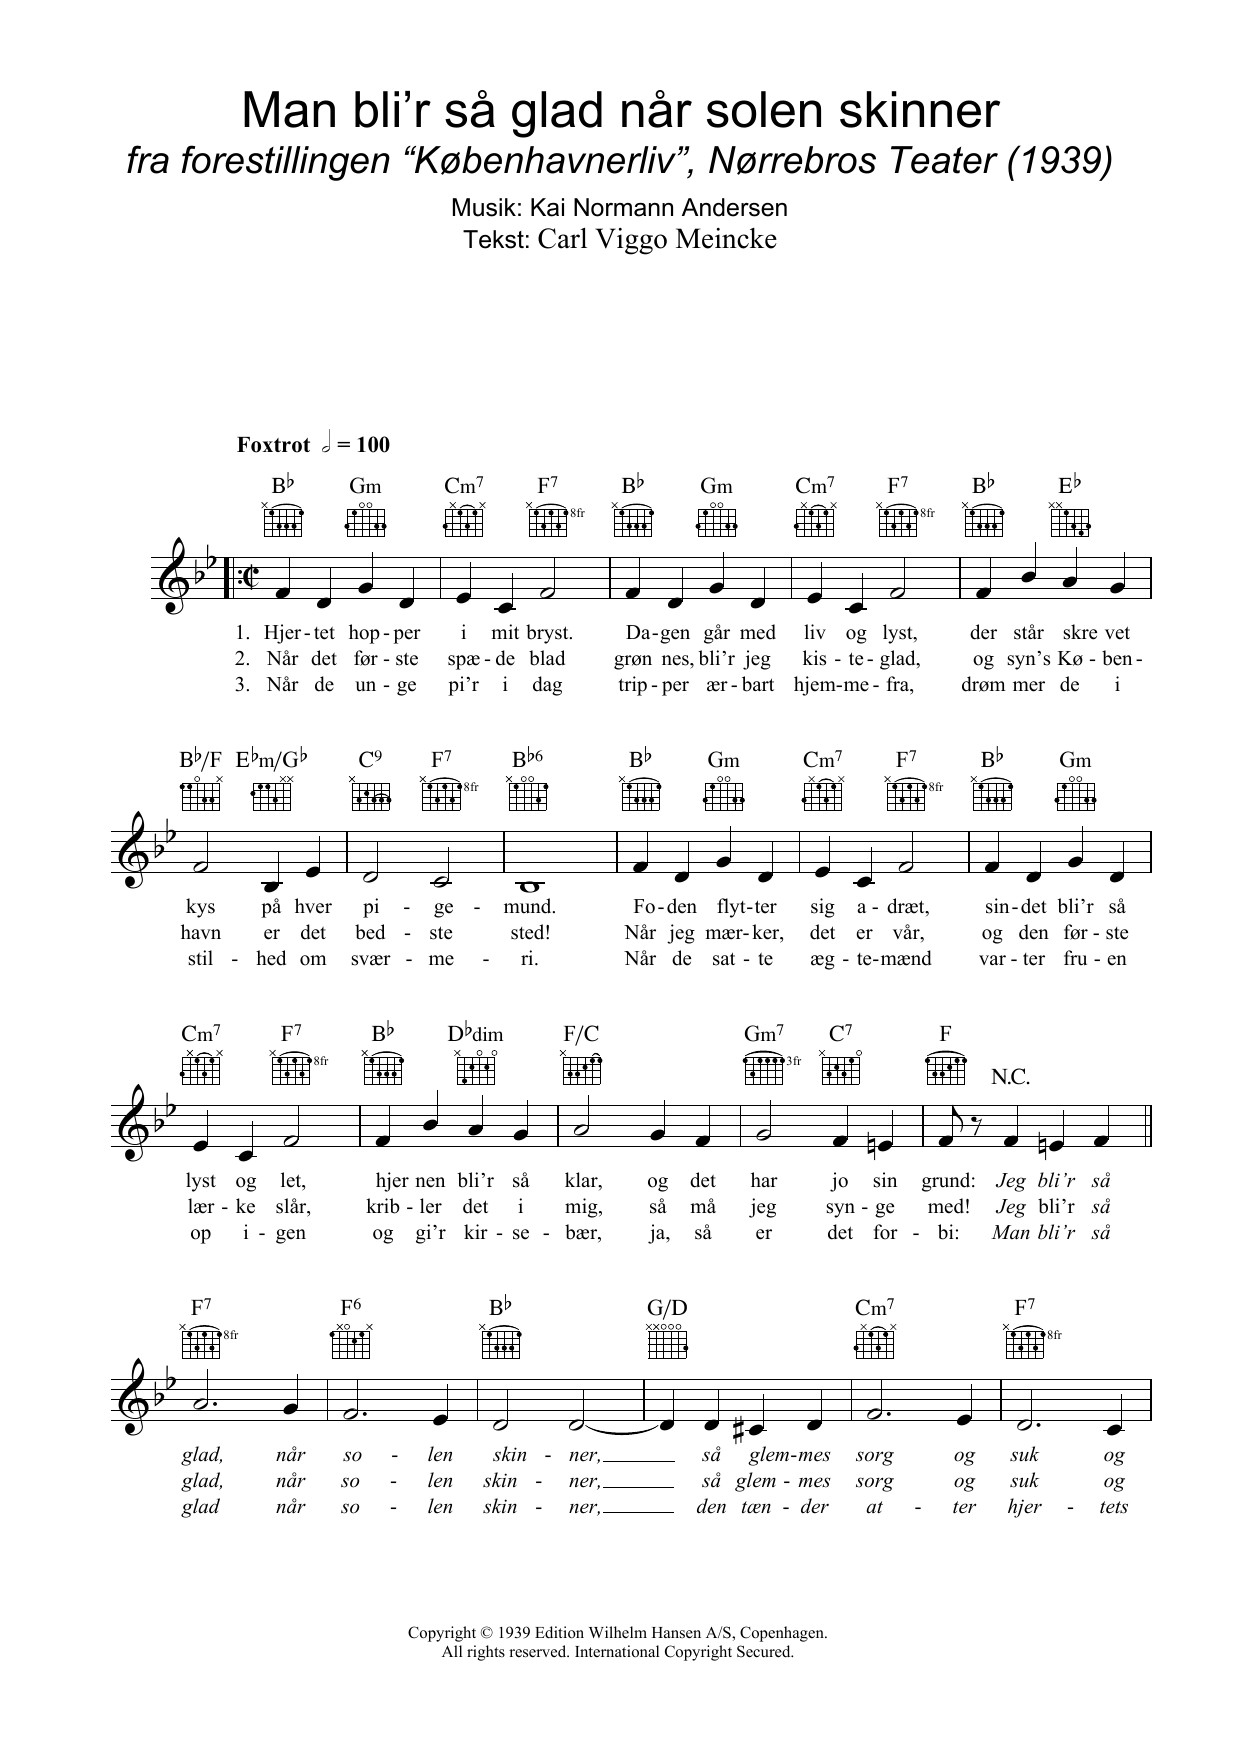 Download Kai Normann Andersen Man Bli'r Så Glad Når Solen Skinner Sheet Music and learn how to play Melody Line, Lyrics & Chords PDF digital score in minutes